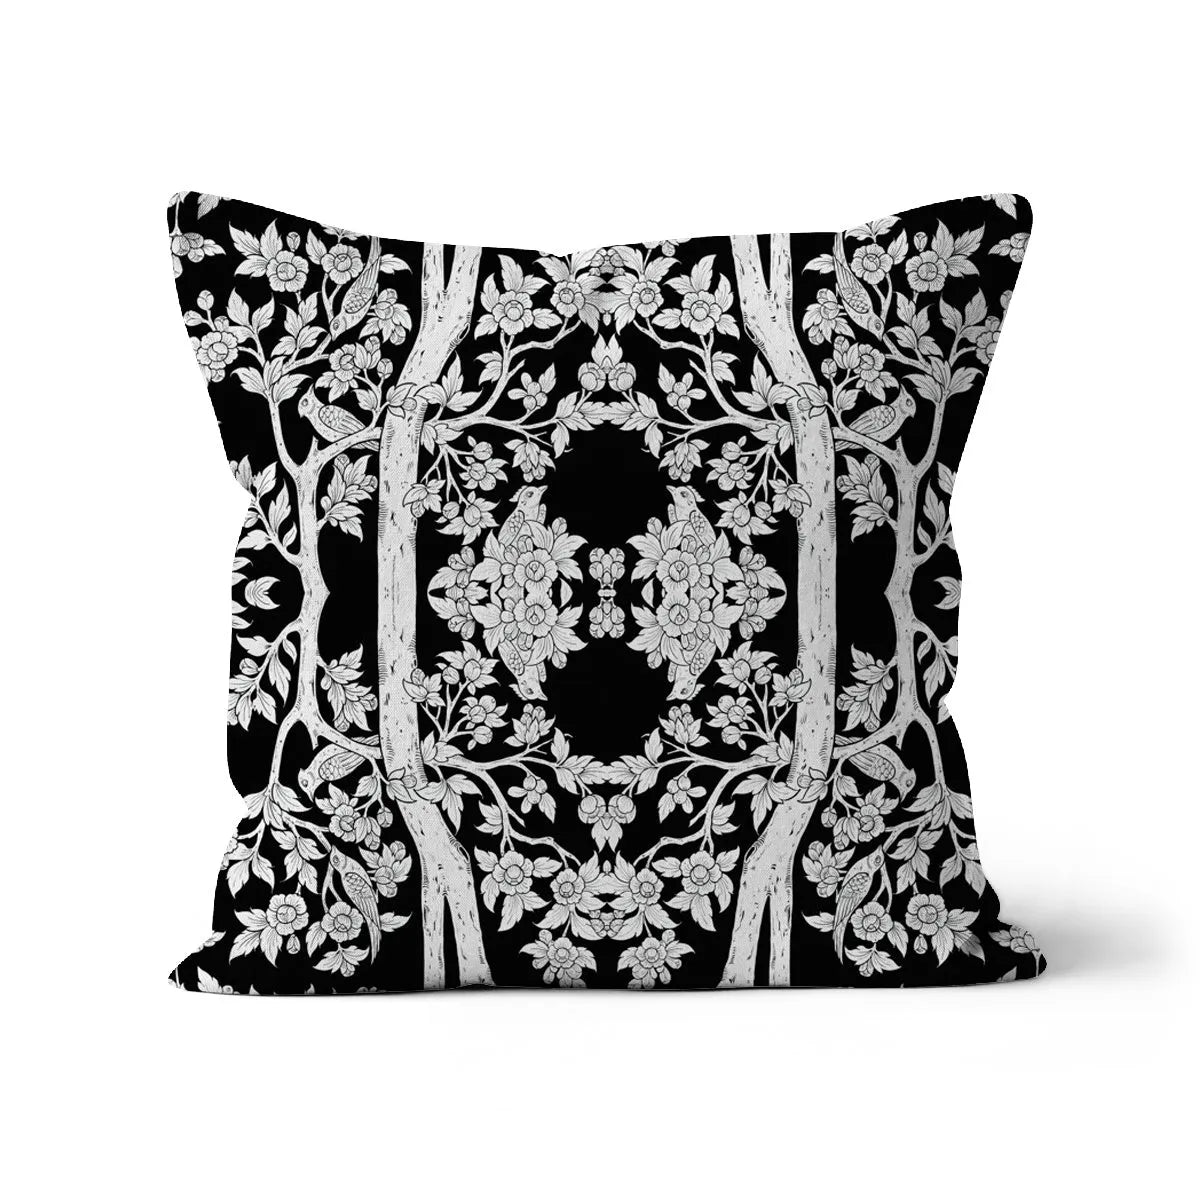 Aviary Black Cushion - Decorative Throw Pillow - Canvas / 16x16 - Pillows - Toby